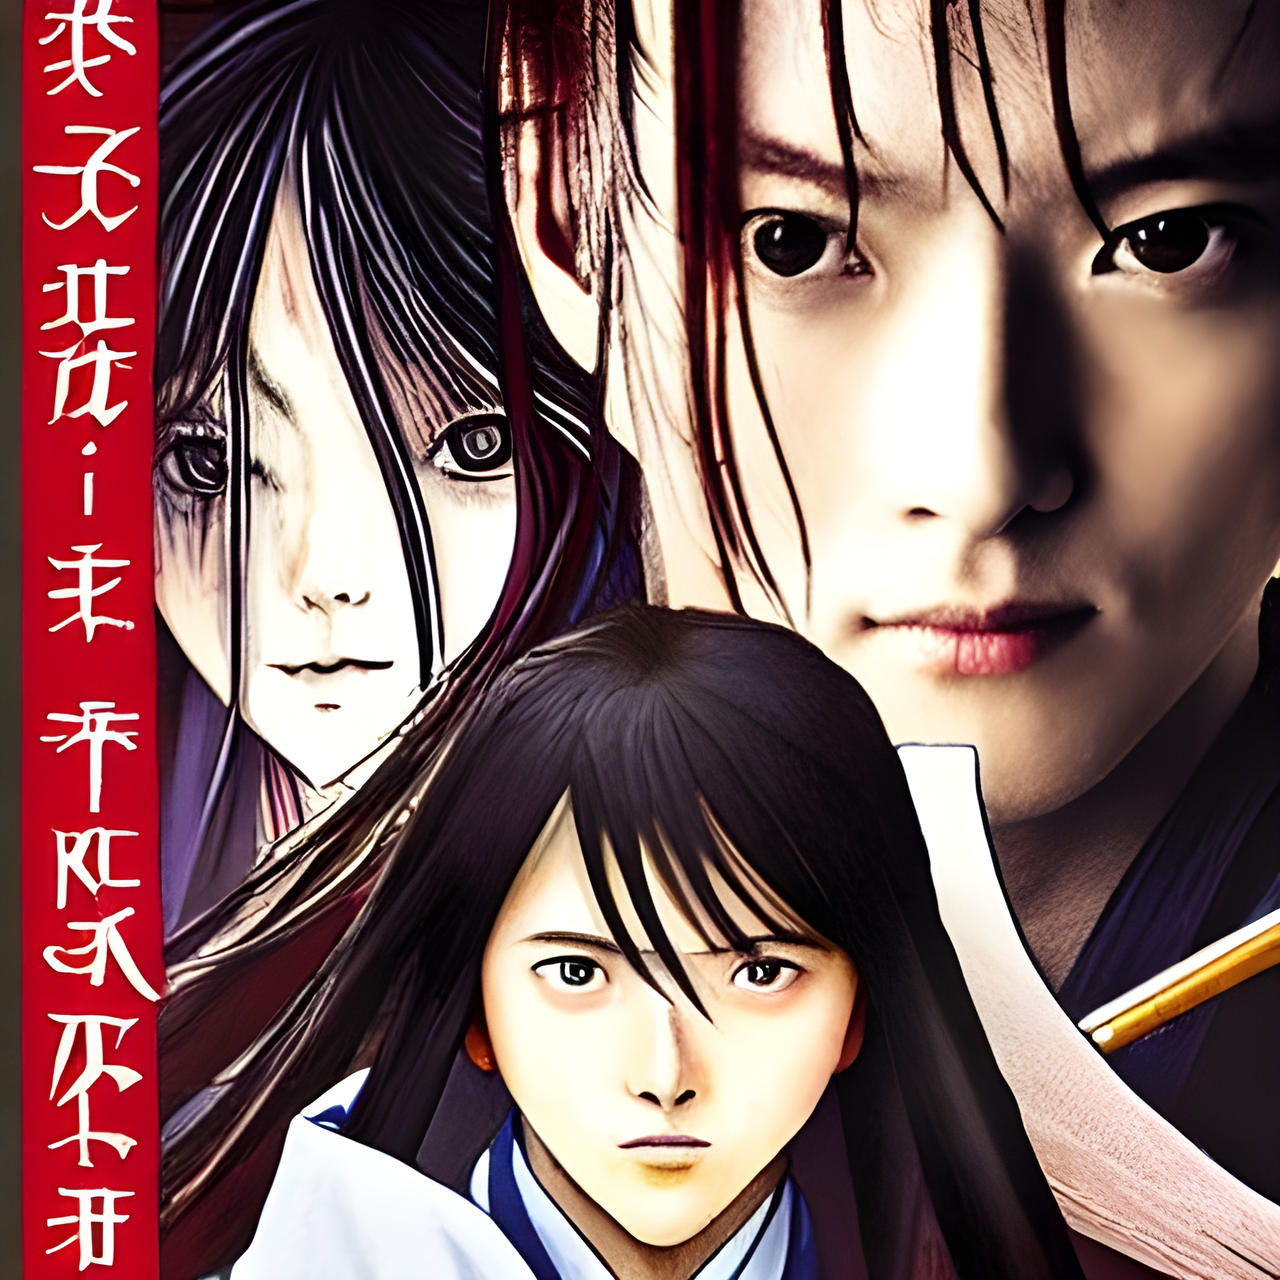 Rurouni Kenshin, Jump Database